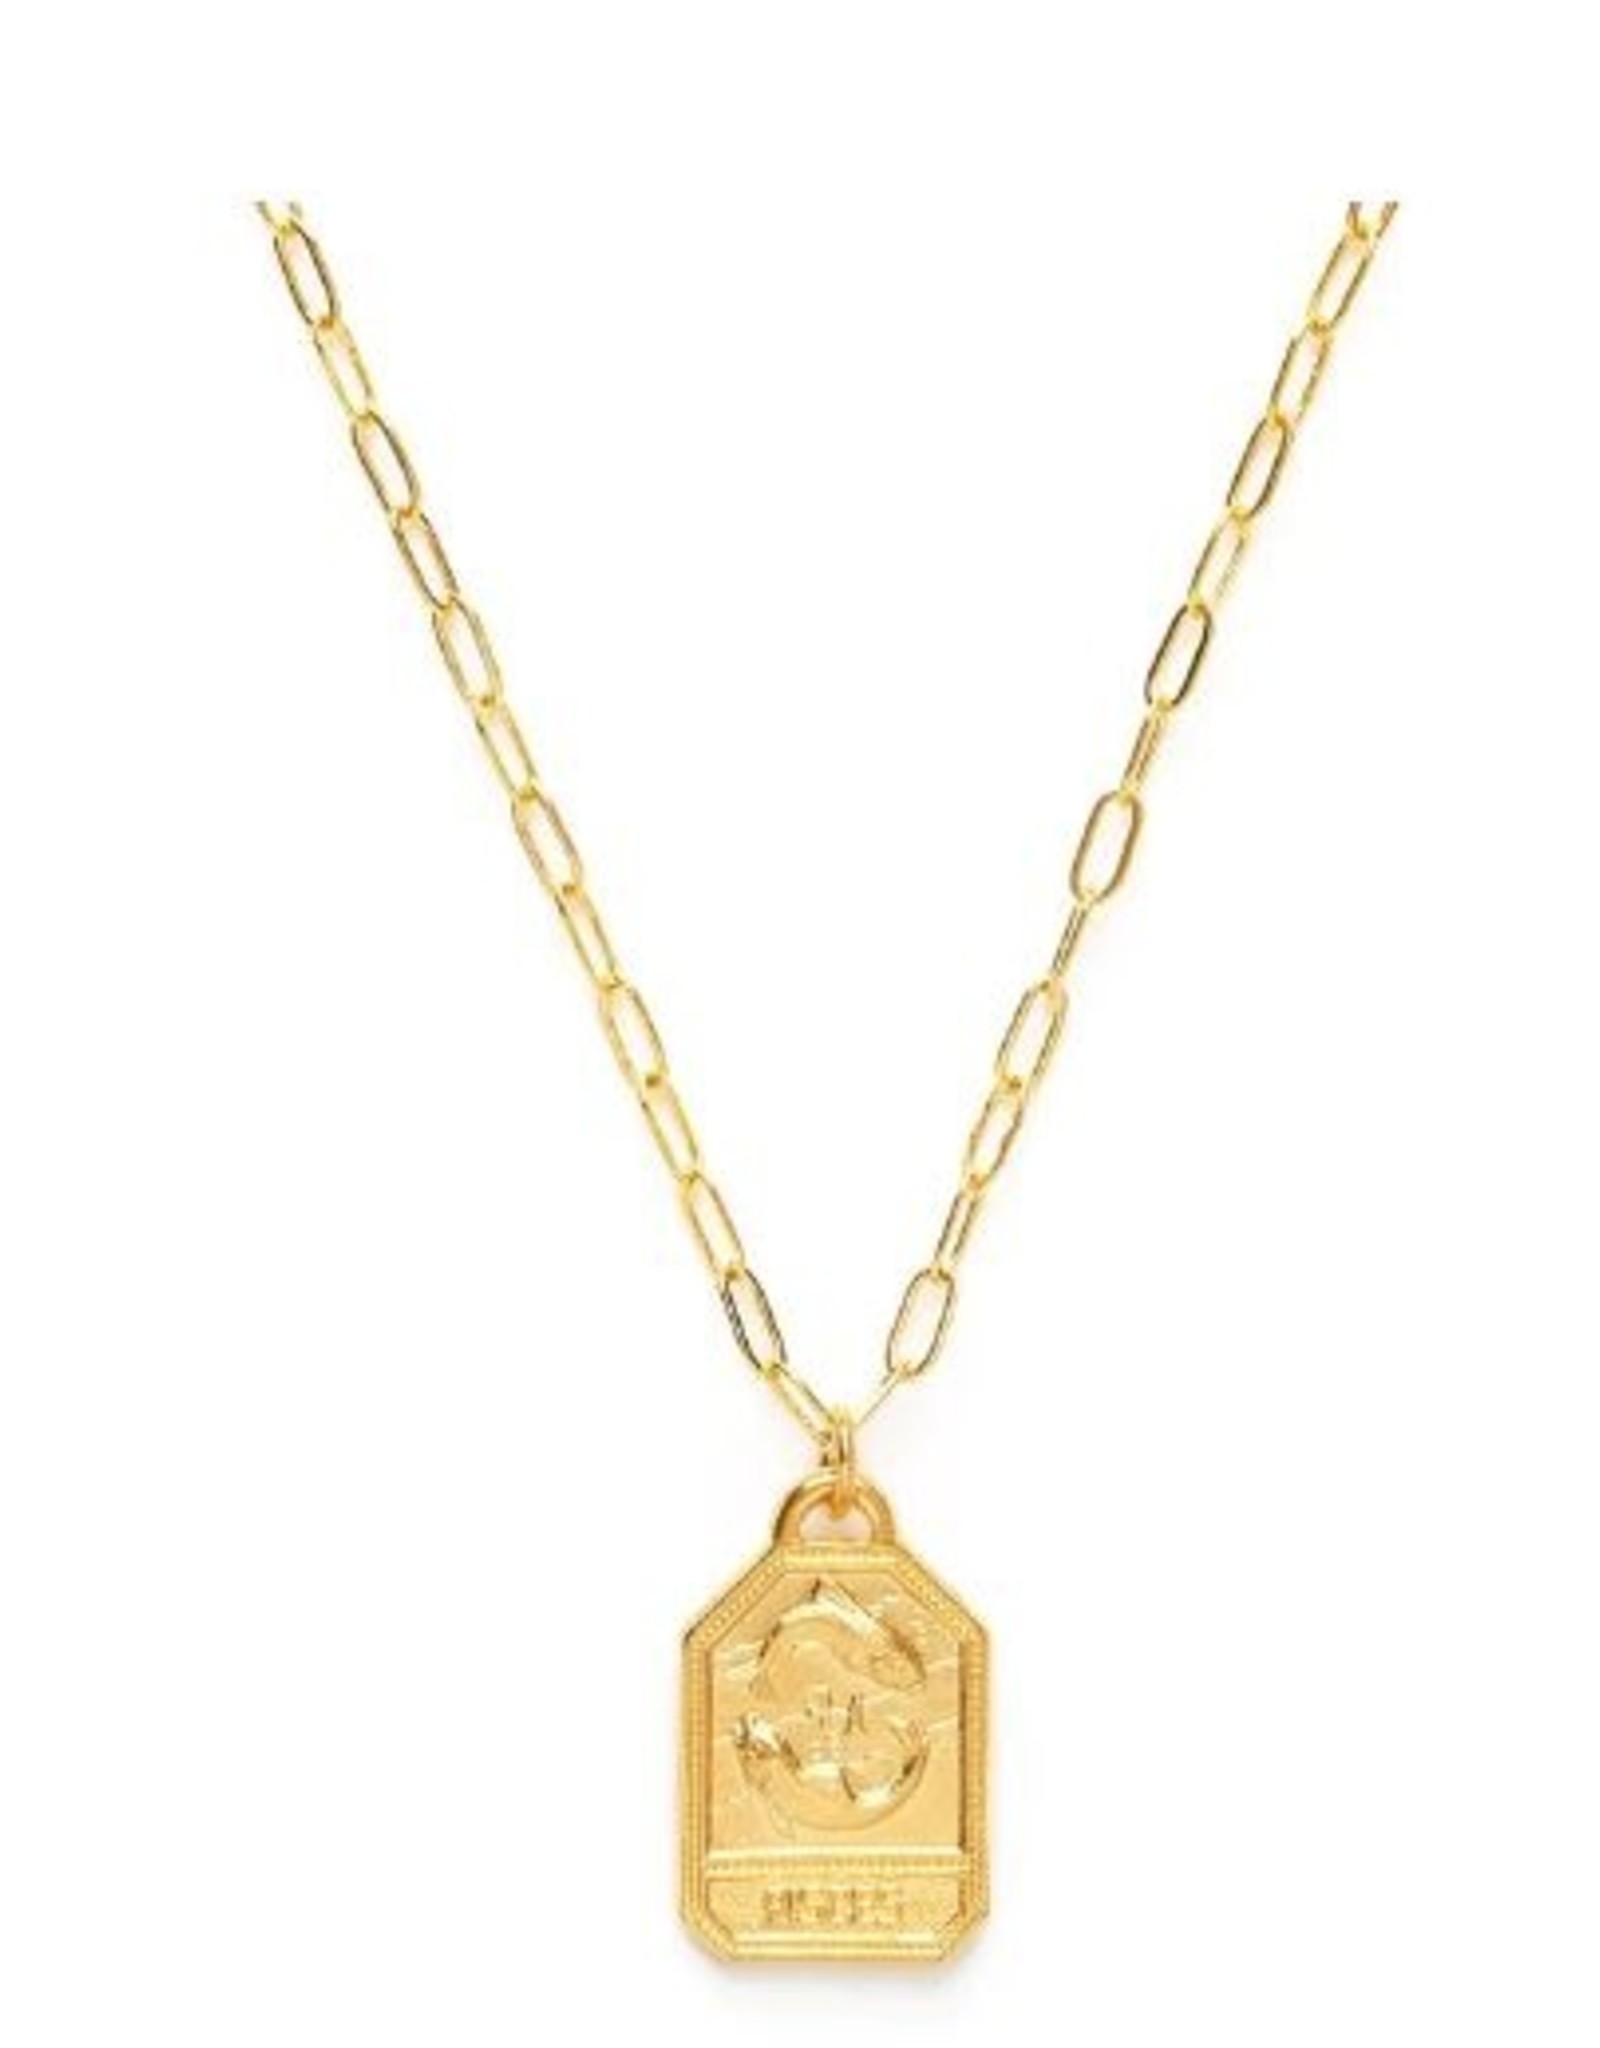 *Amano Studio *Zodiac Medallion Dog Tag Necklace - Pisces